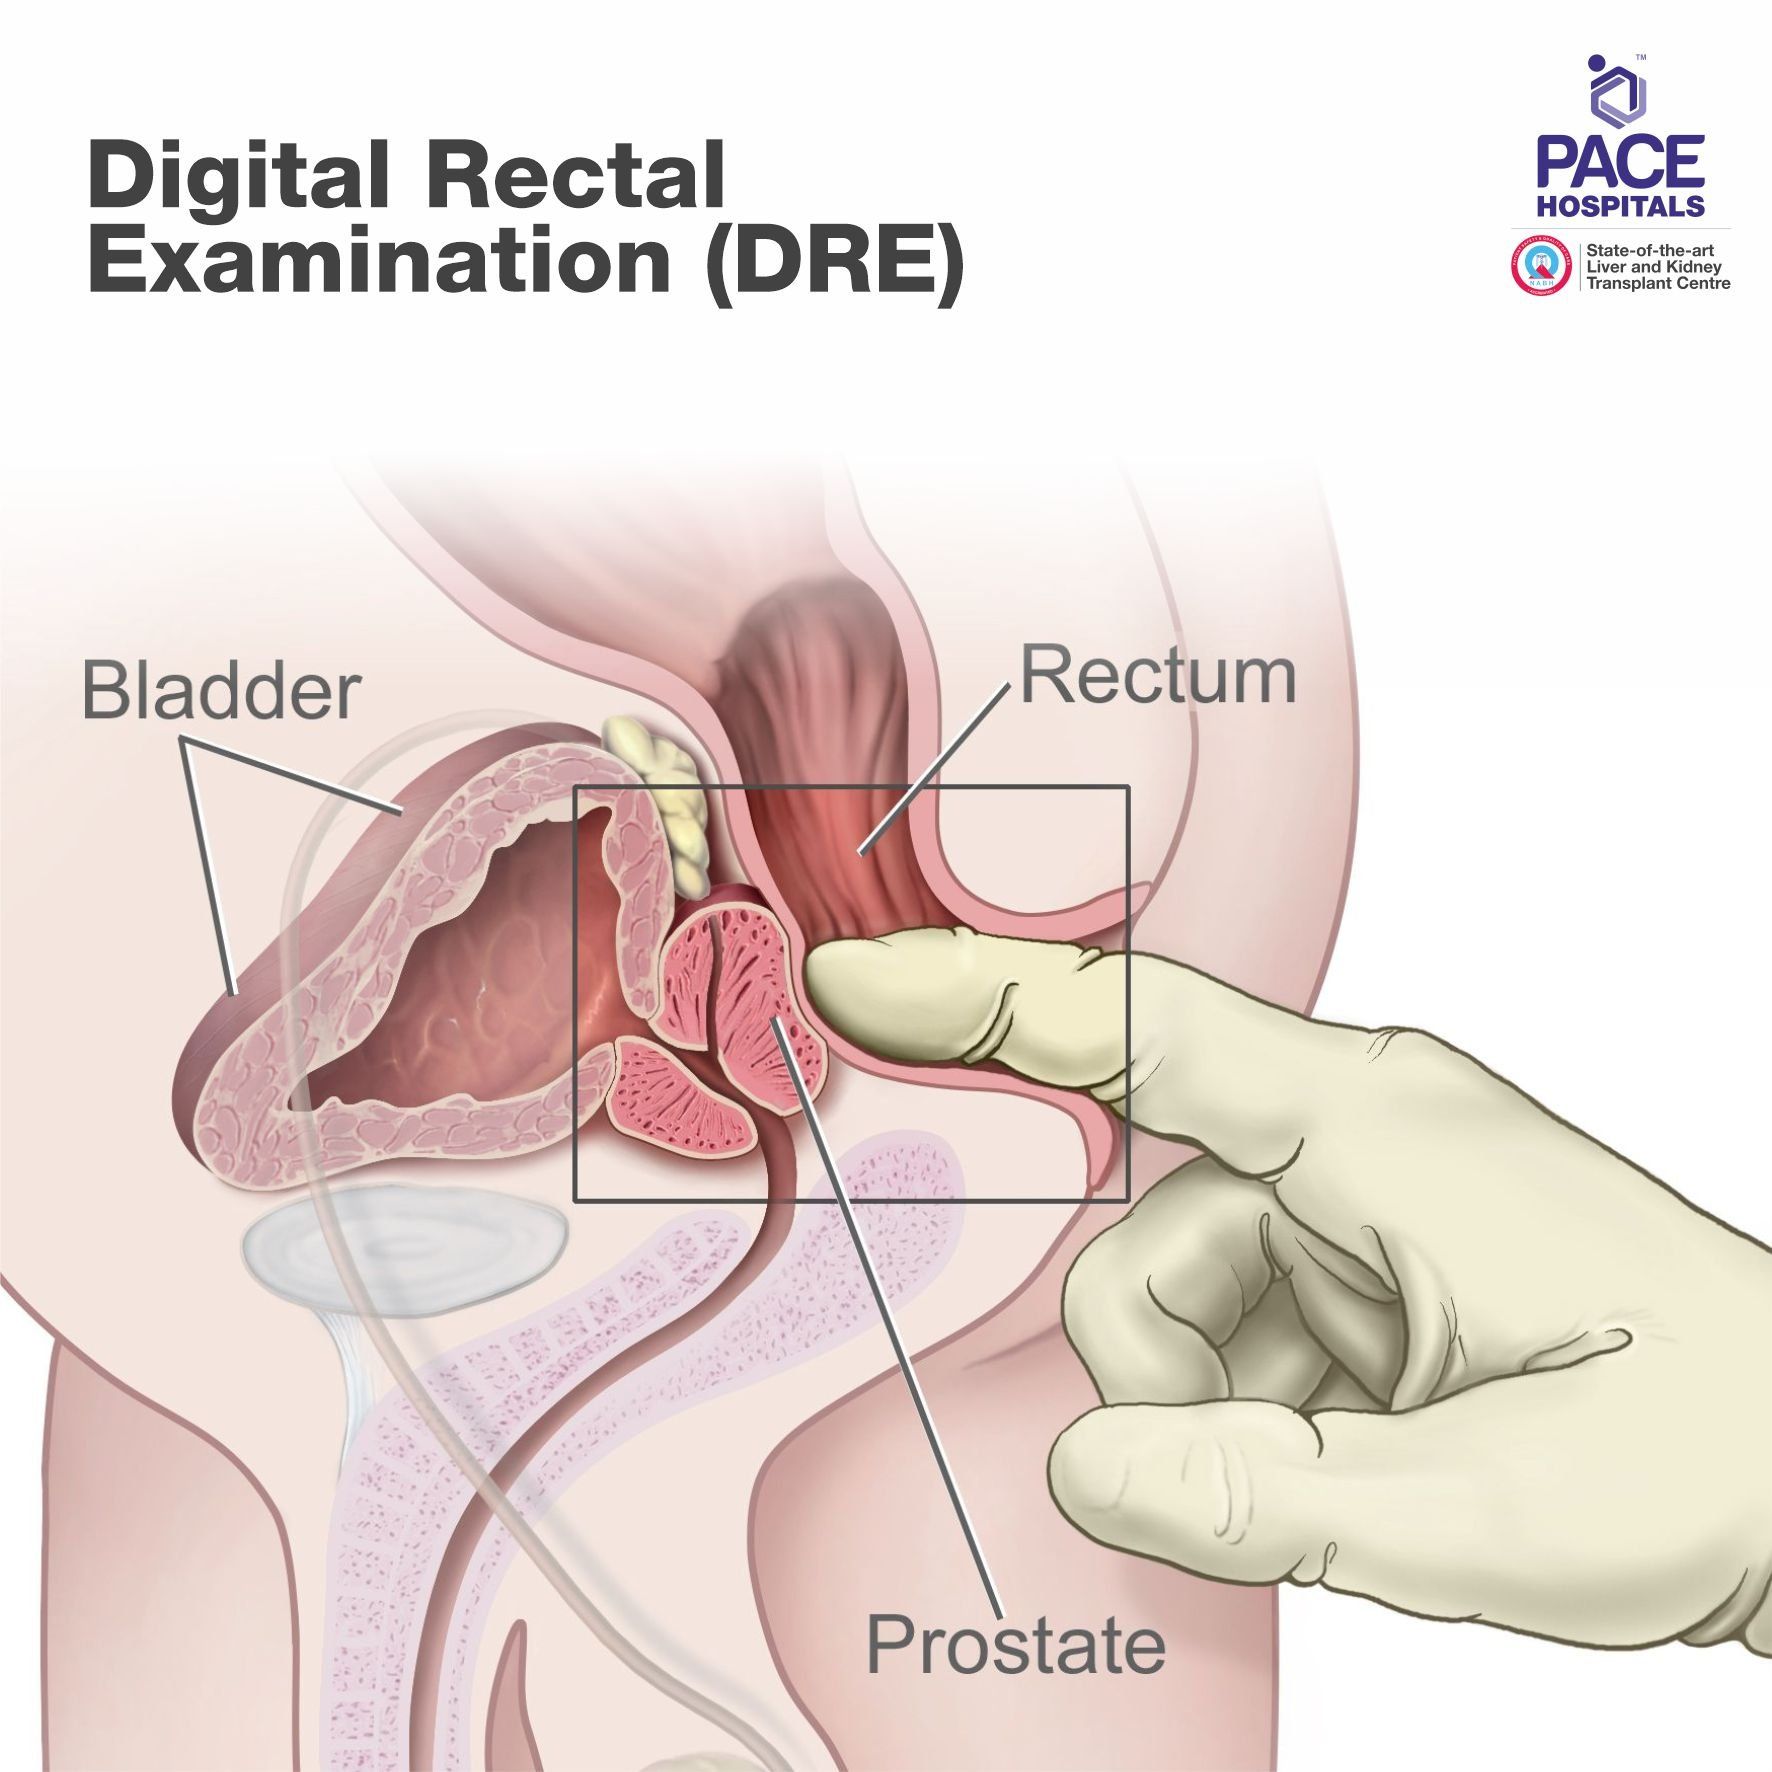 Digital rectal examination (DRE)